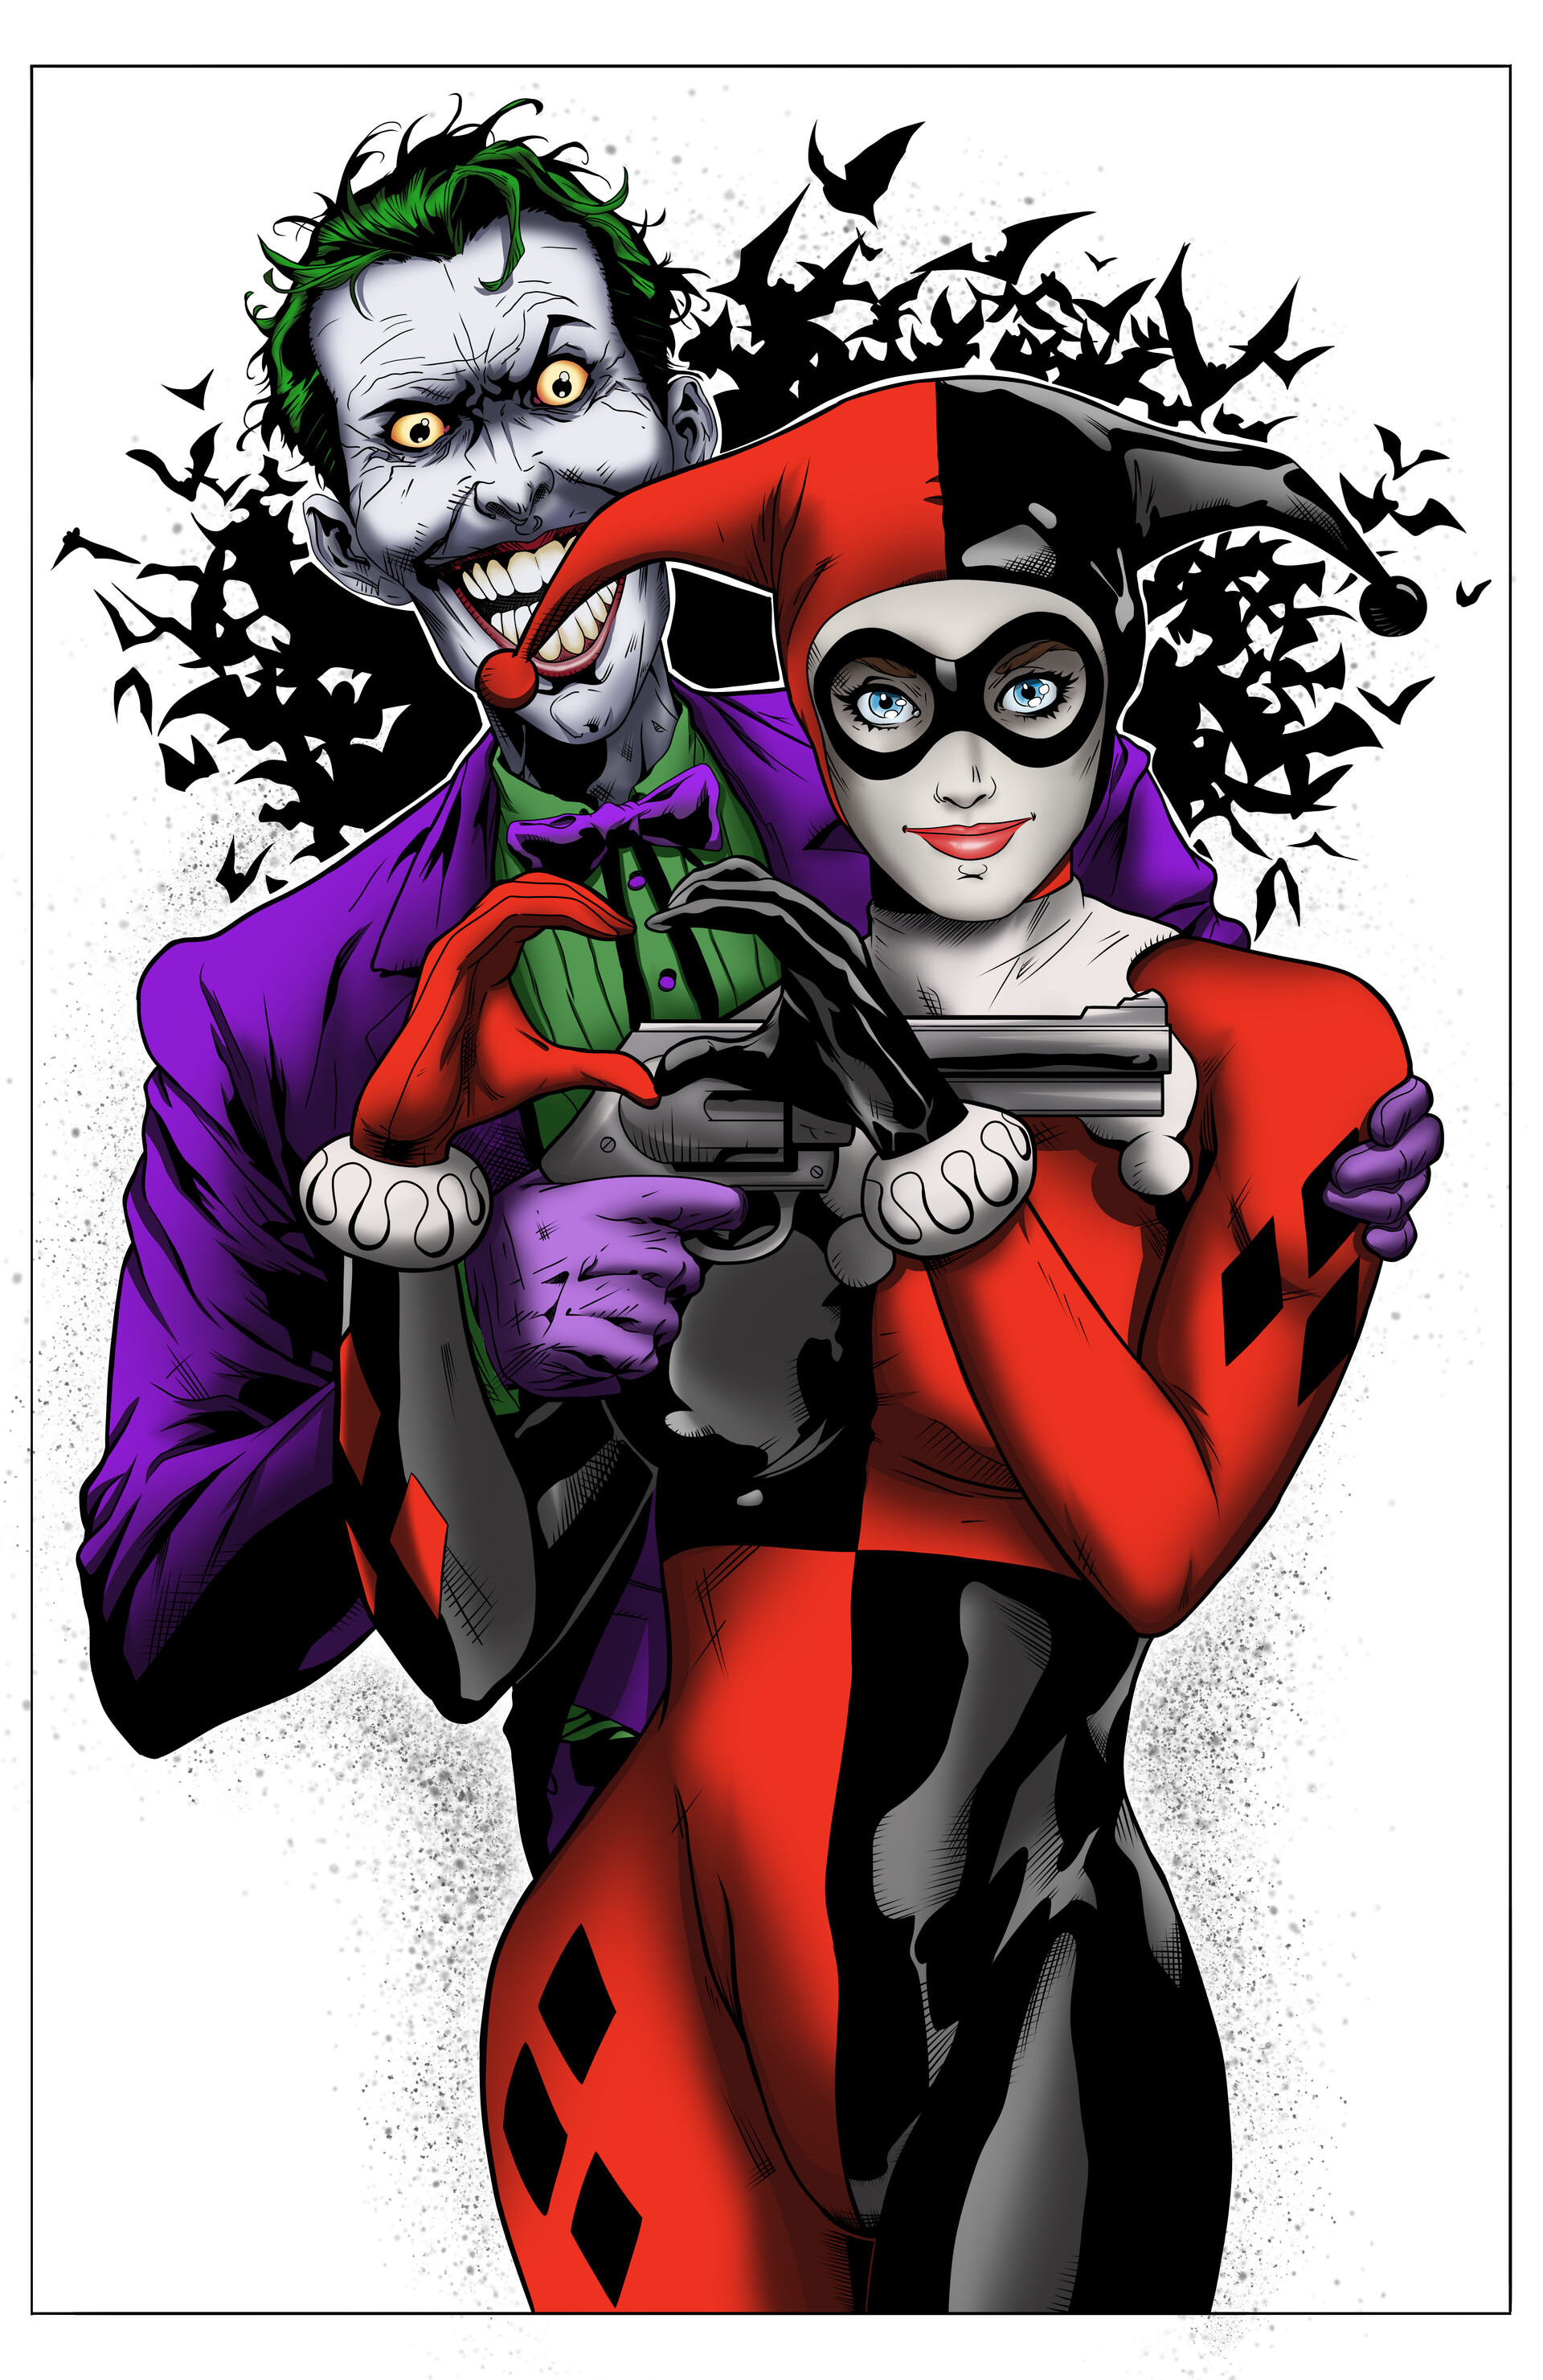 ArtStation - Harley and Joker - colored